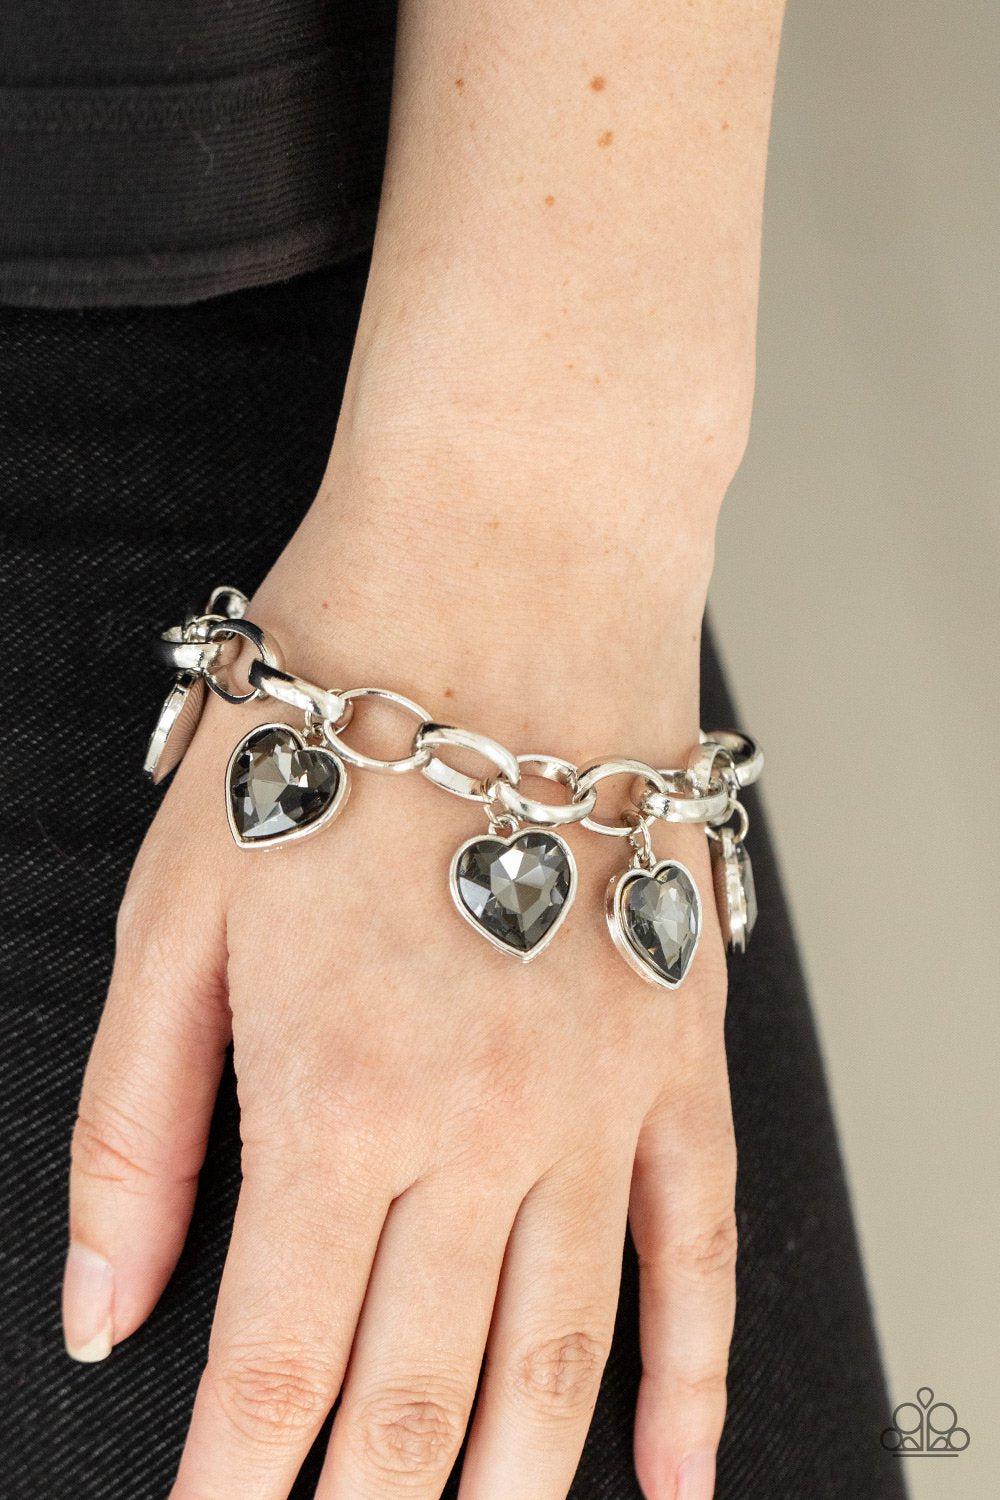 Candy Heart Charmer Silver Rhinestone Heart Charm Bracelet - Paparazzi Accessories- lightbox - CarasShop.com - $5 Jewelry by Cara Jewels